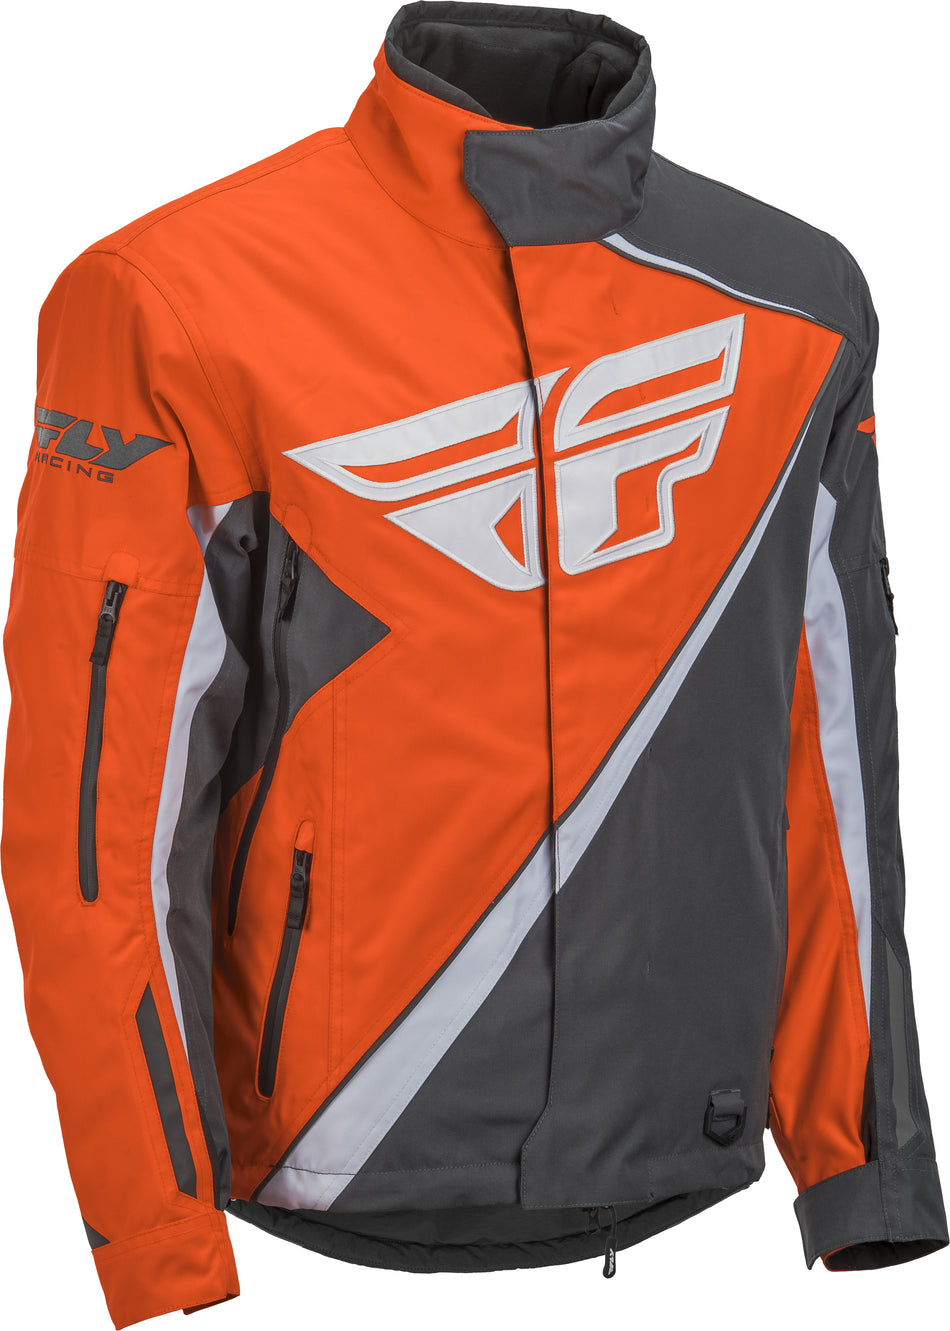 FLY RACING Fly Snx Pro Jacket Orange/Grey Ys 470-4088SYS